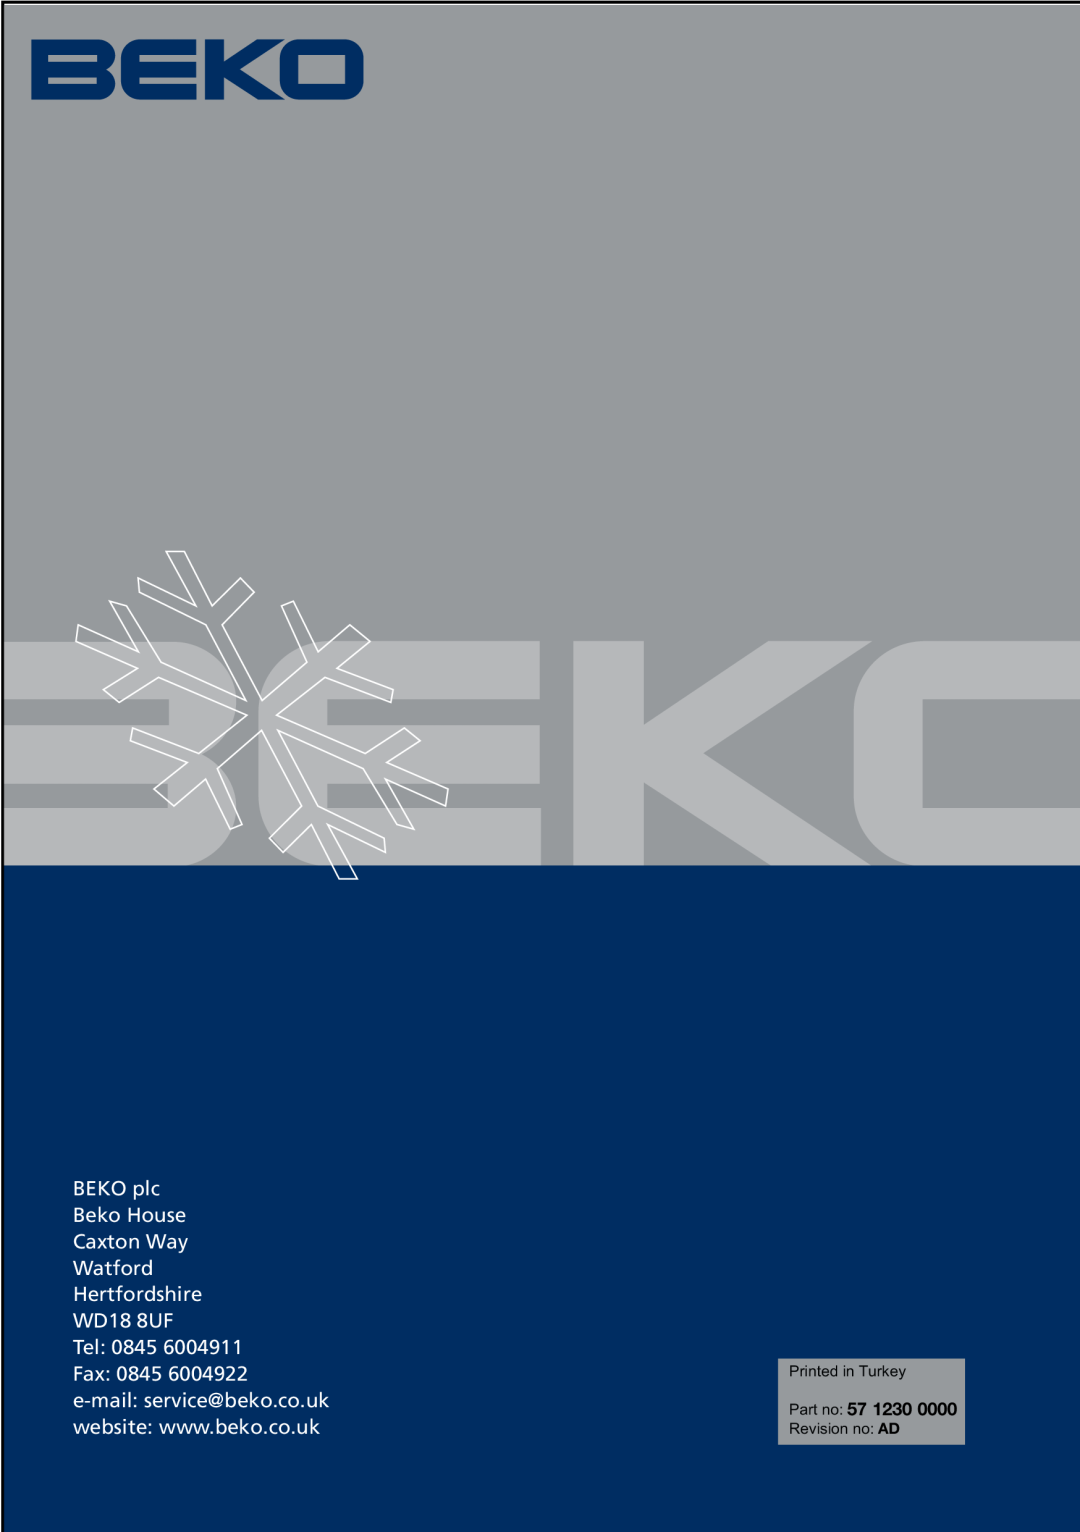 Beko CS 6914 APW manual BEKO plc Beko House Caxton Way Watford Hertfordshire WD18 8UF, Part no 57, Revision no AD 